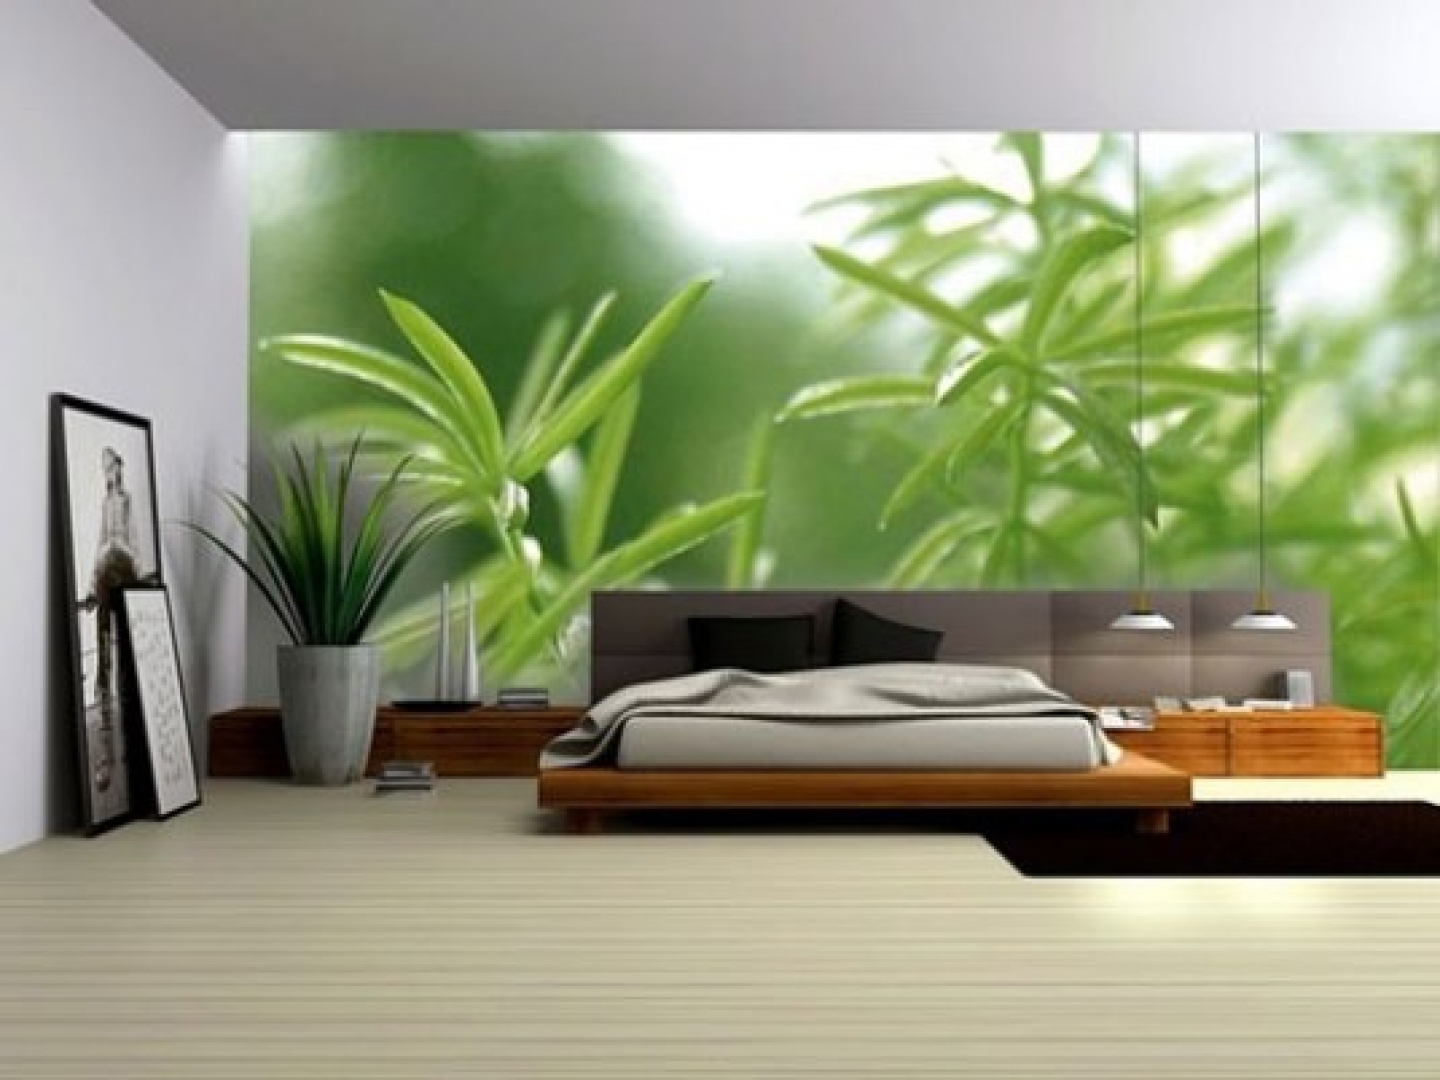 Free download Nature wallpaper design ideas for home interior modern 